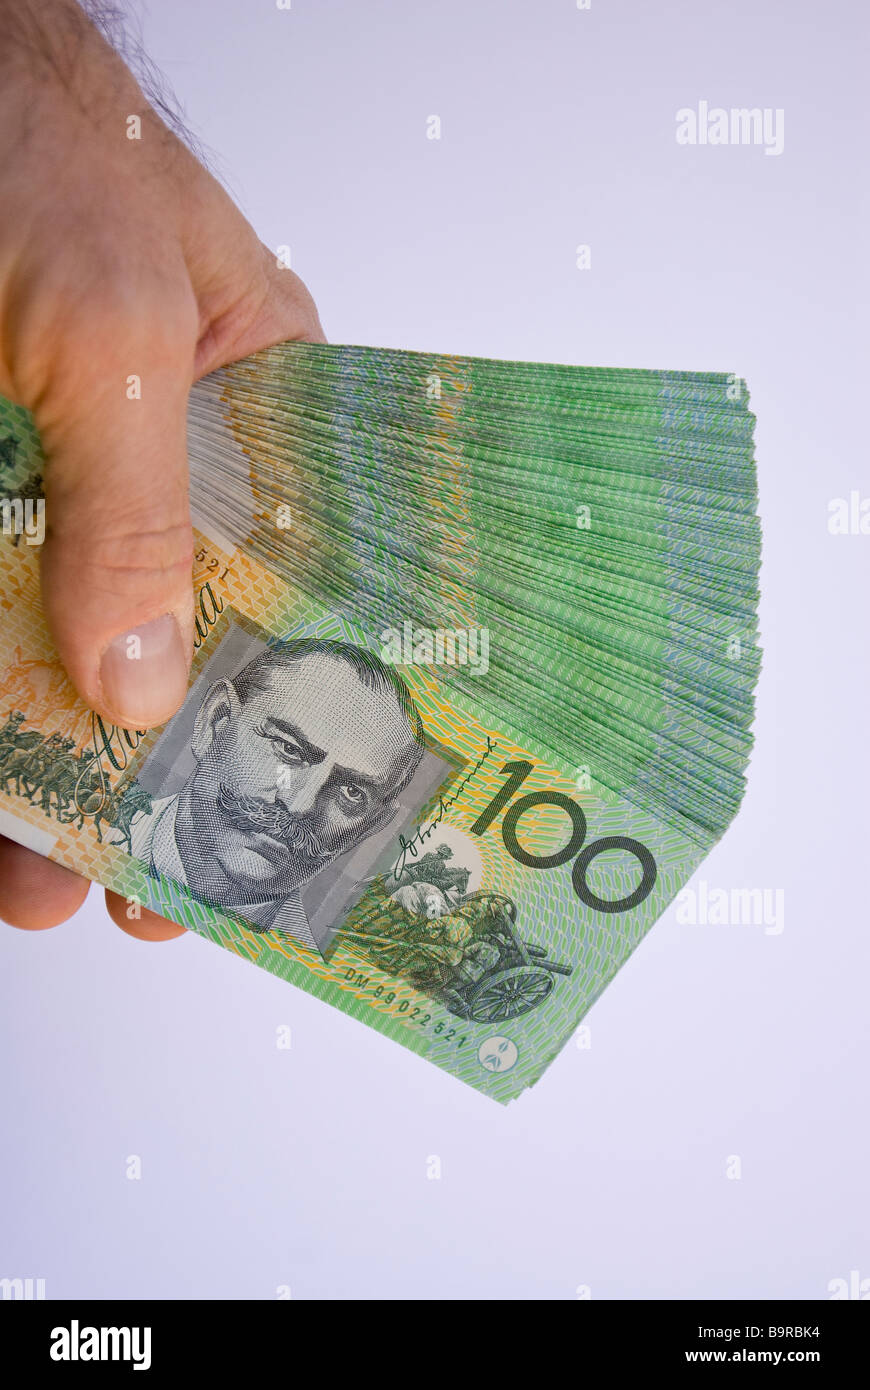 A fan A$20,000 Aus $20,000 twenty thousand Australian dollars in Stock Photo - Alamy